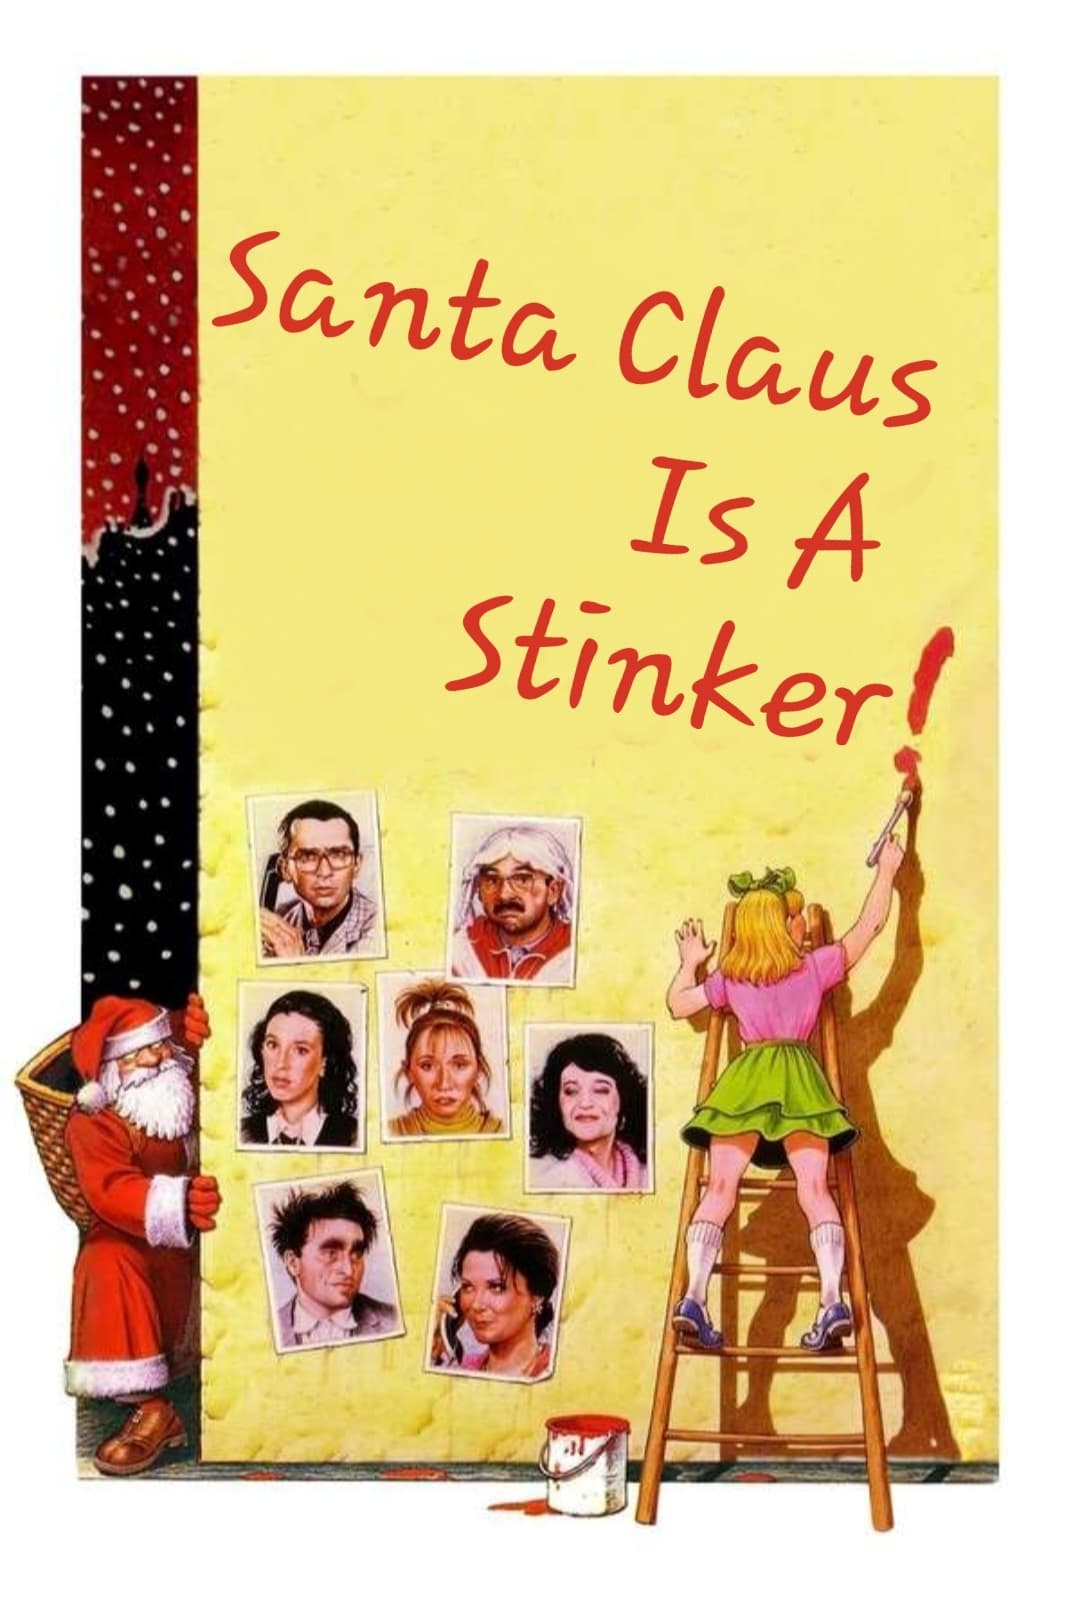 Santa Claus Is a Stinker